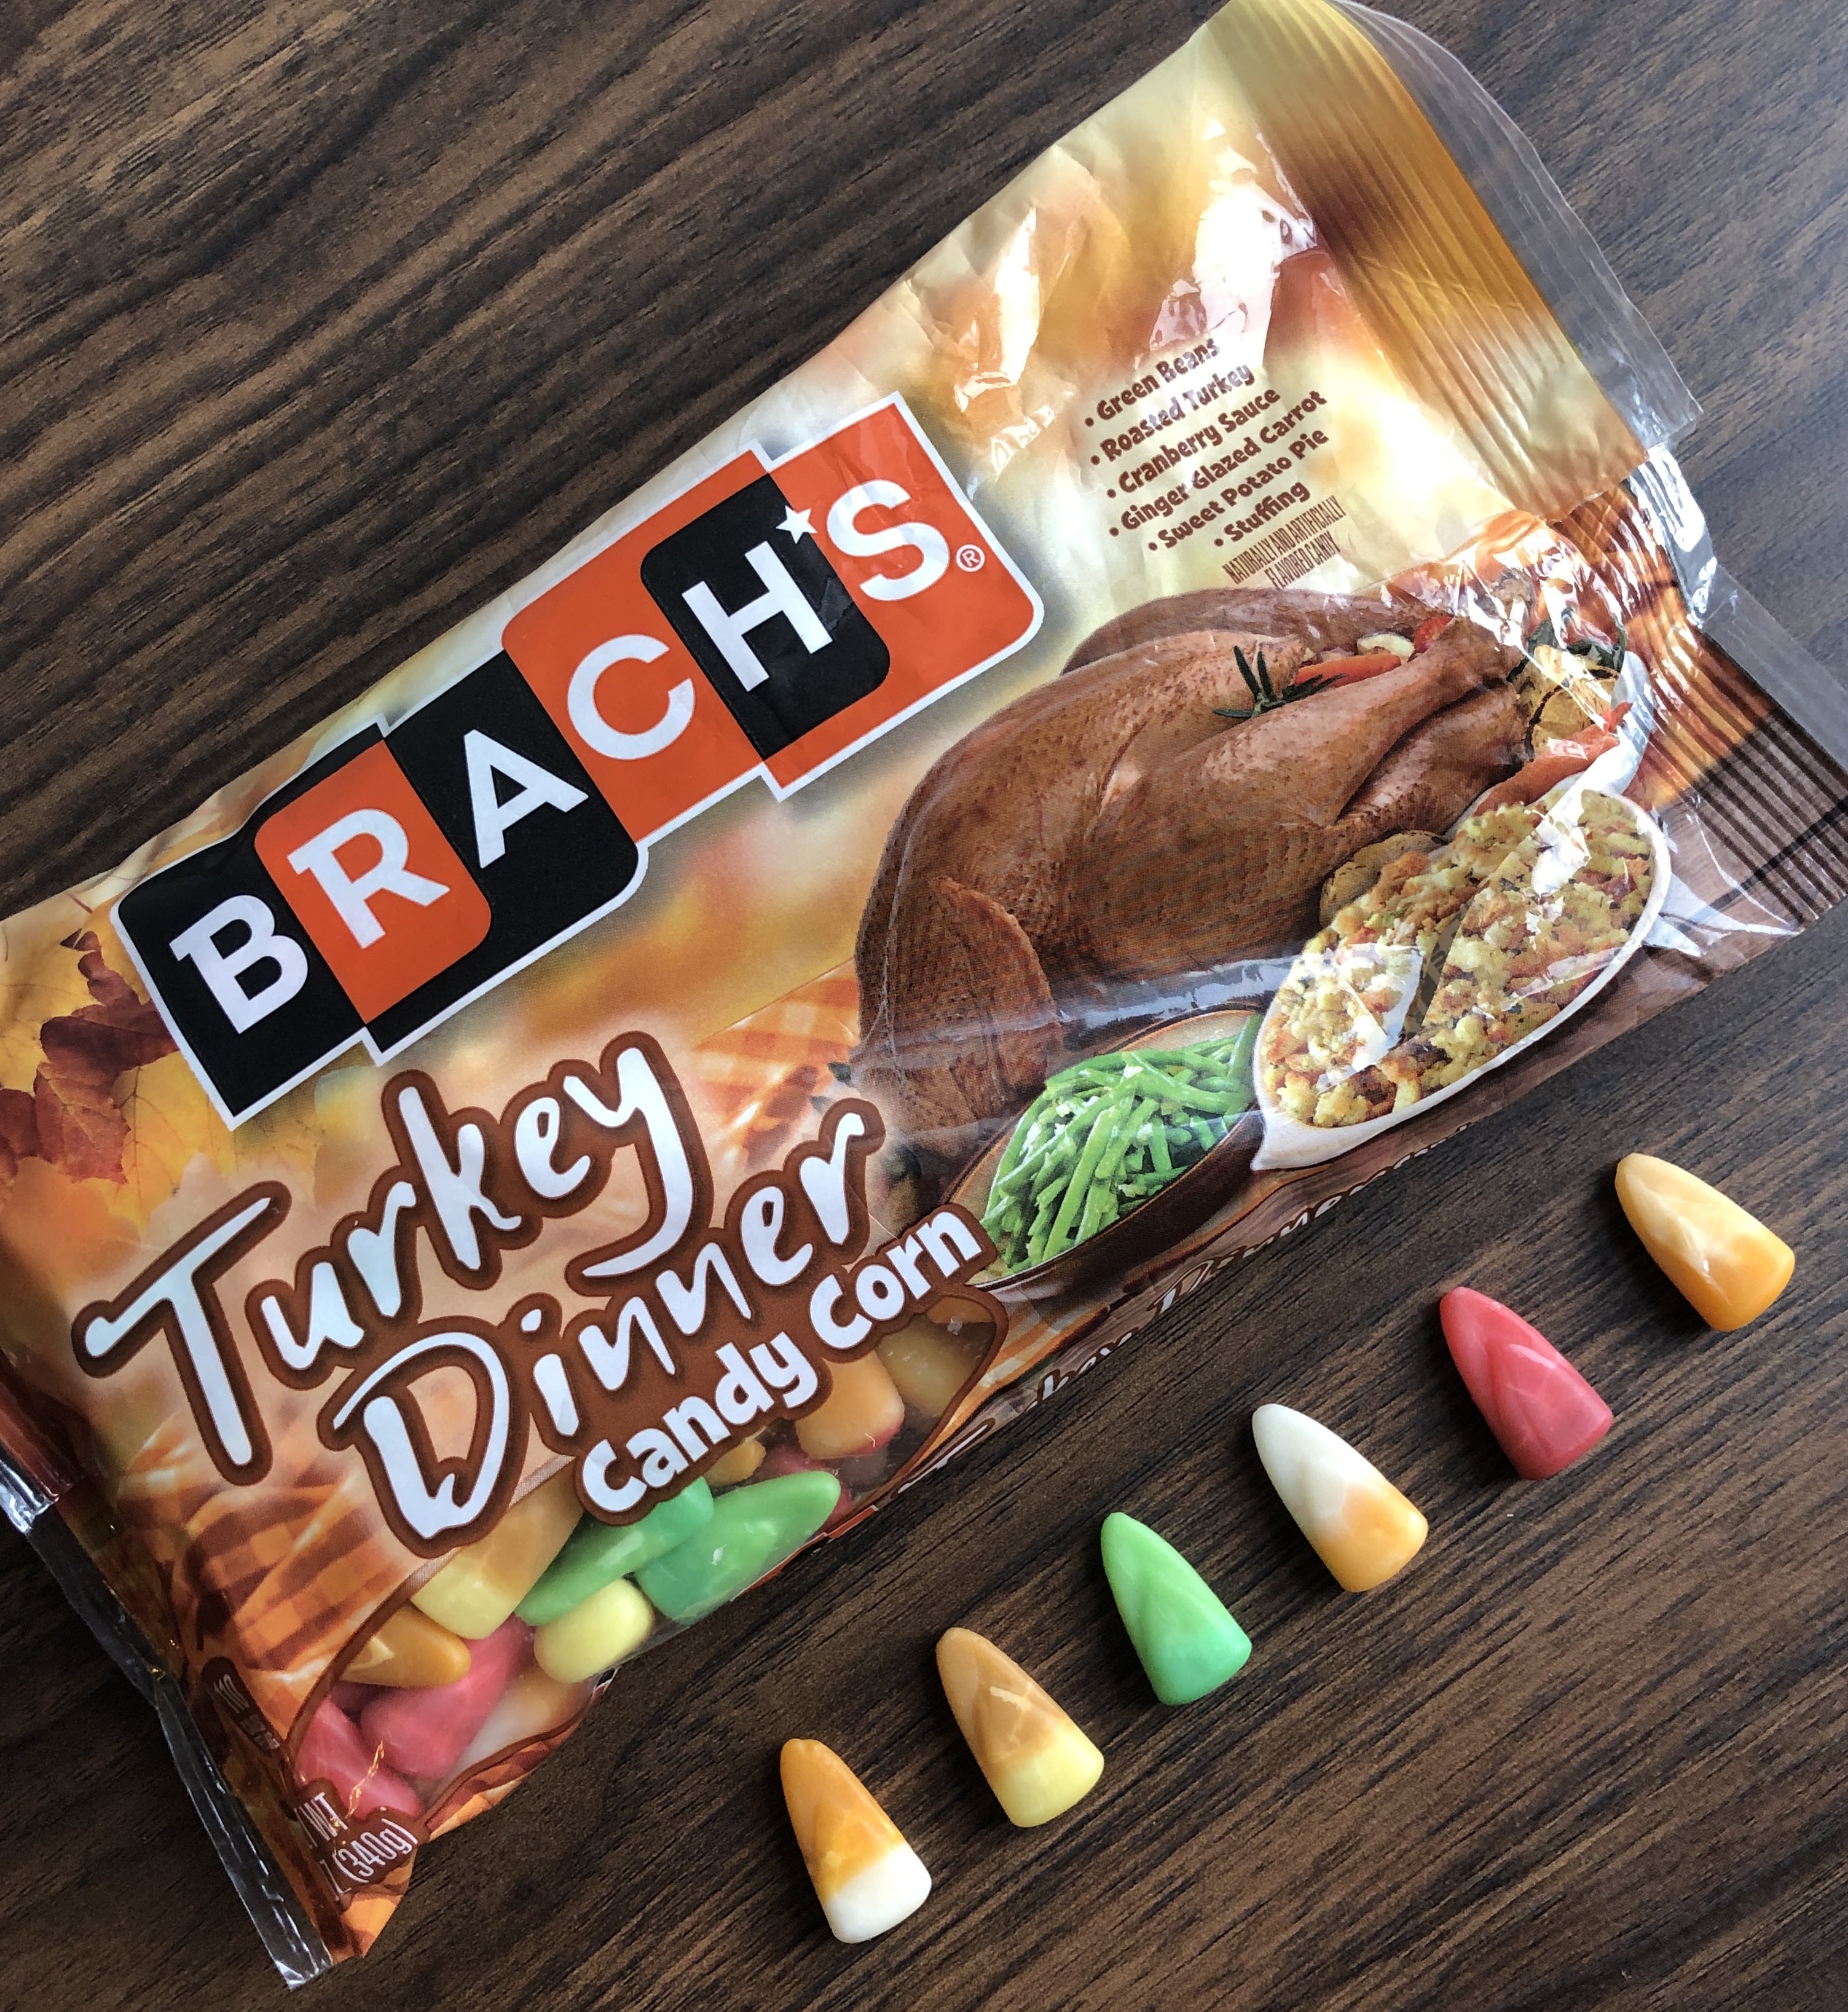 Brach's Turkey Dinner Candy Corn Offers A Mix Of Thanksgiving Flavors